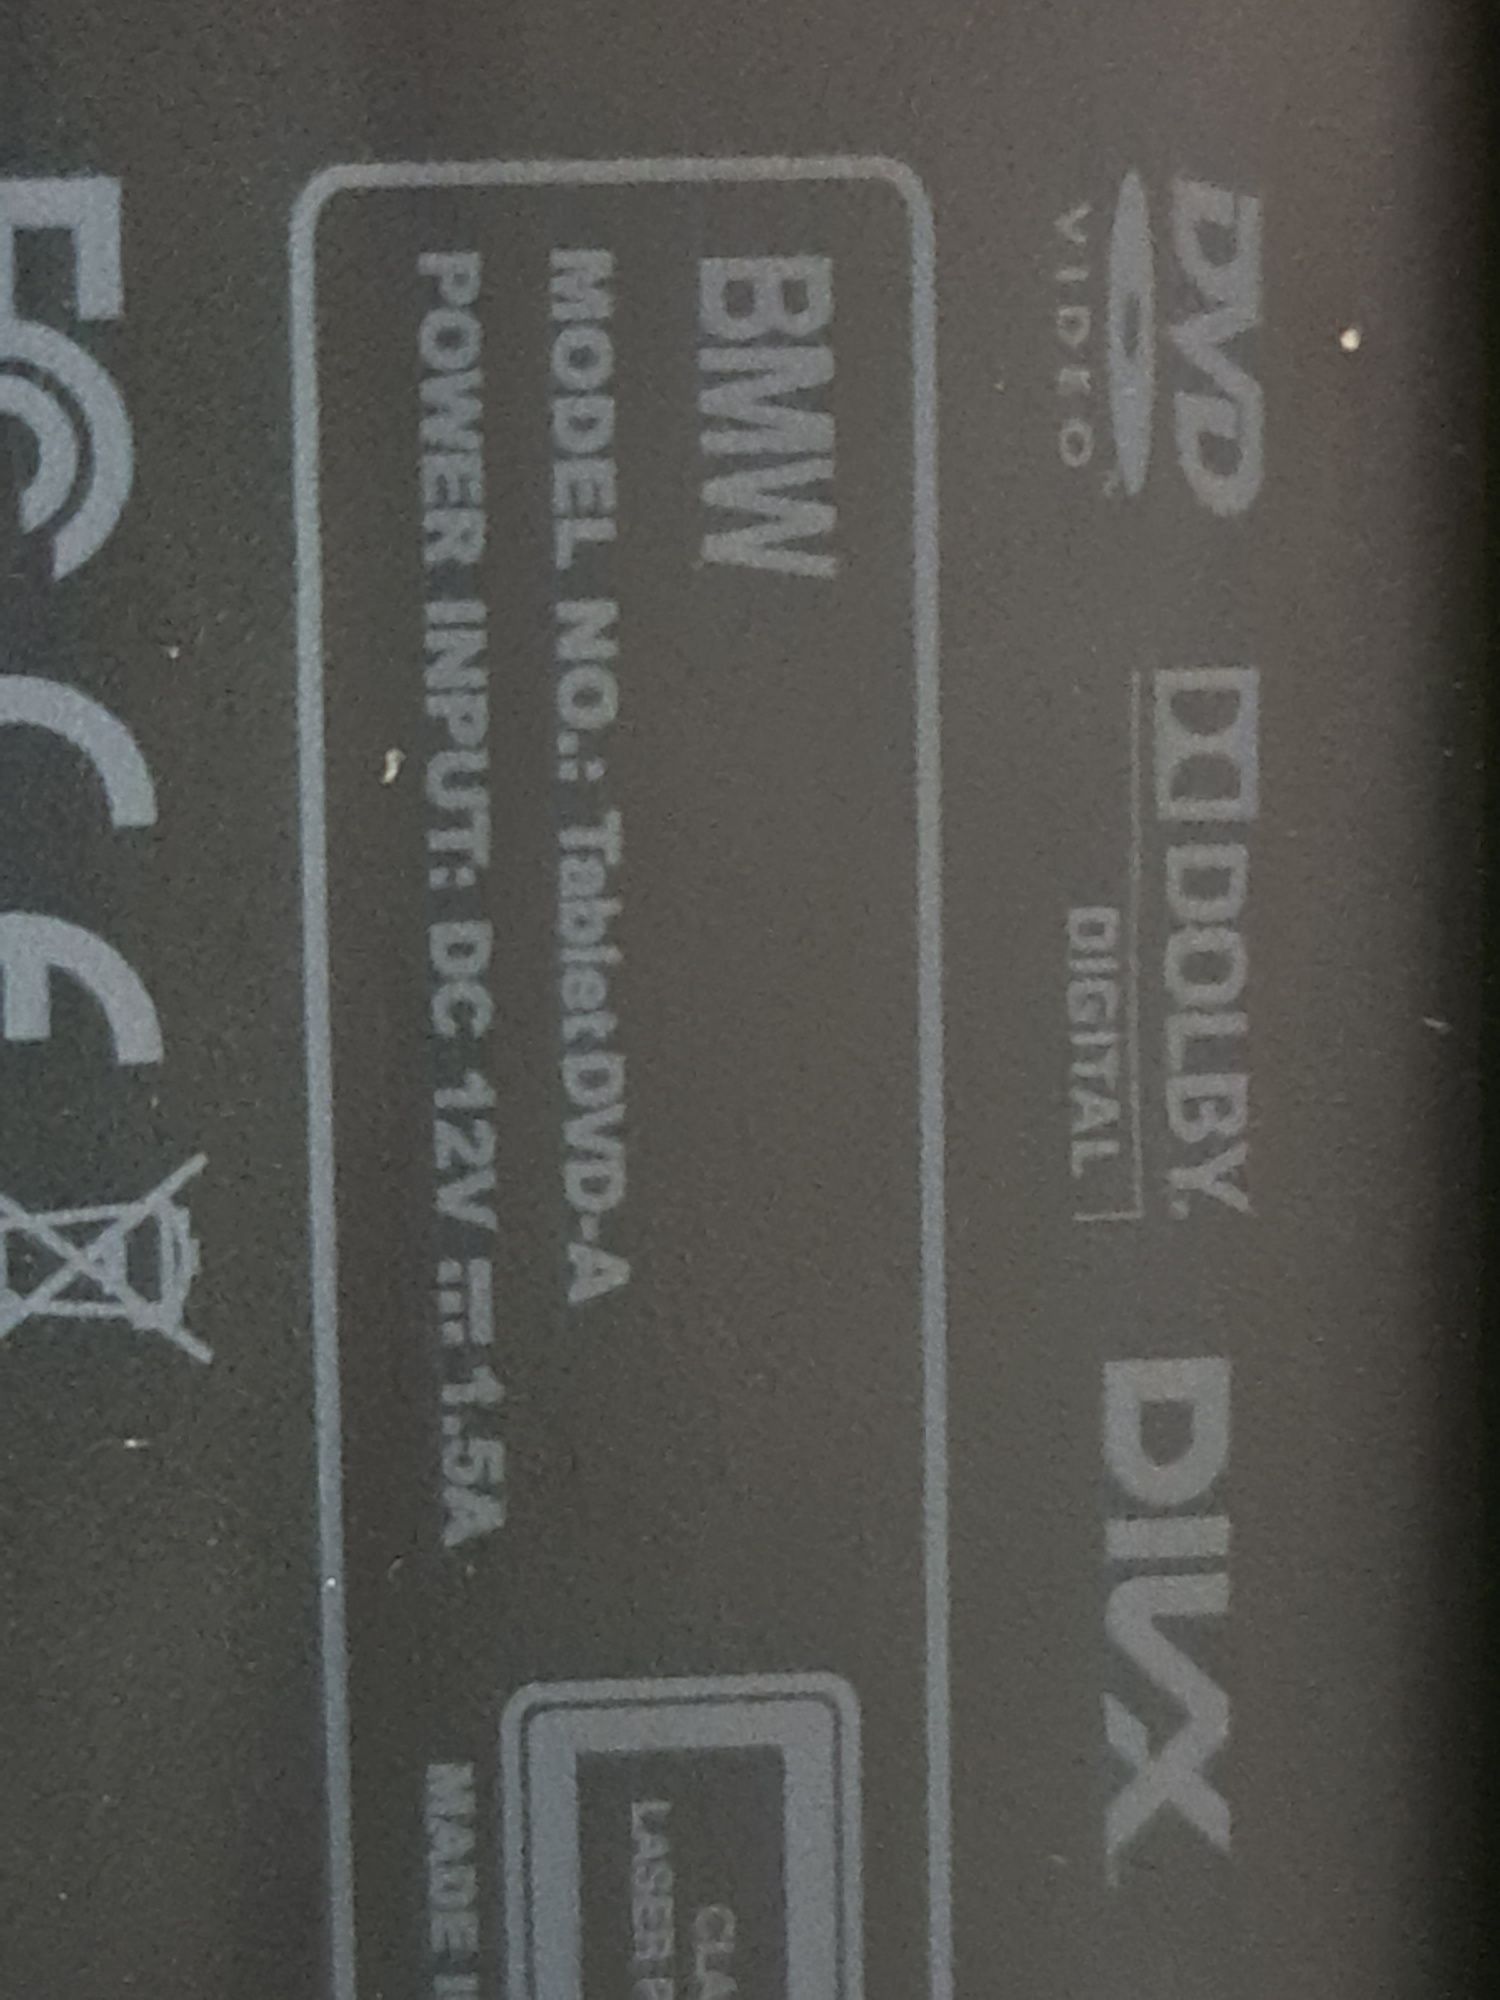 Tablety BMW DVD pełen komplet